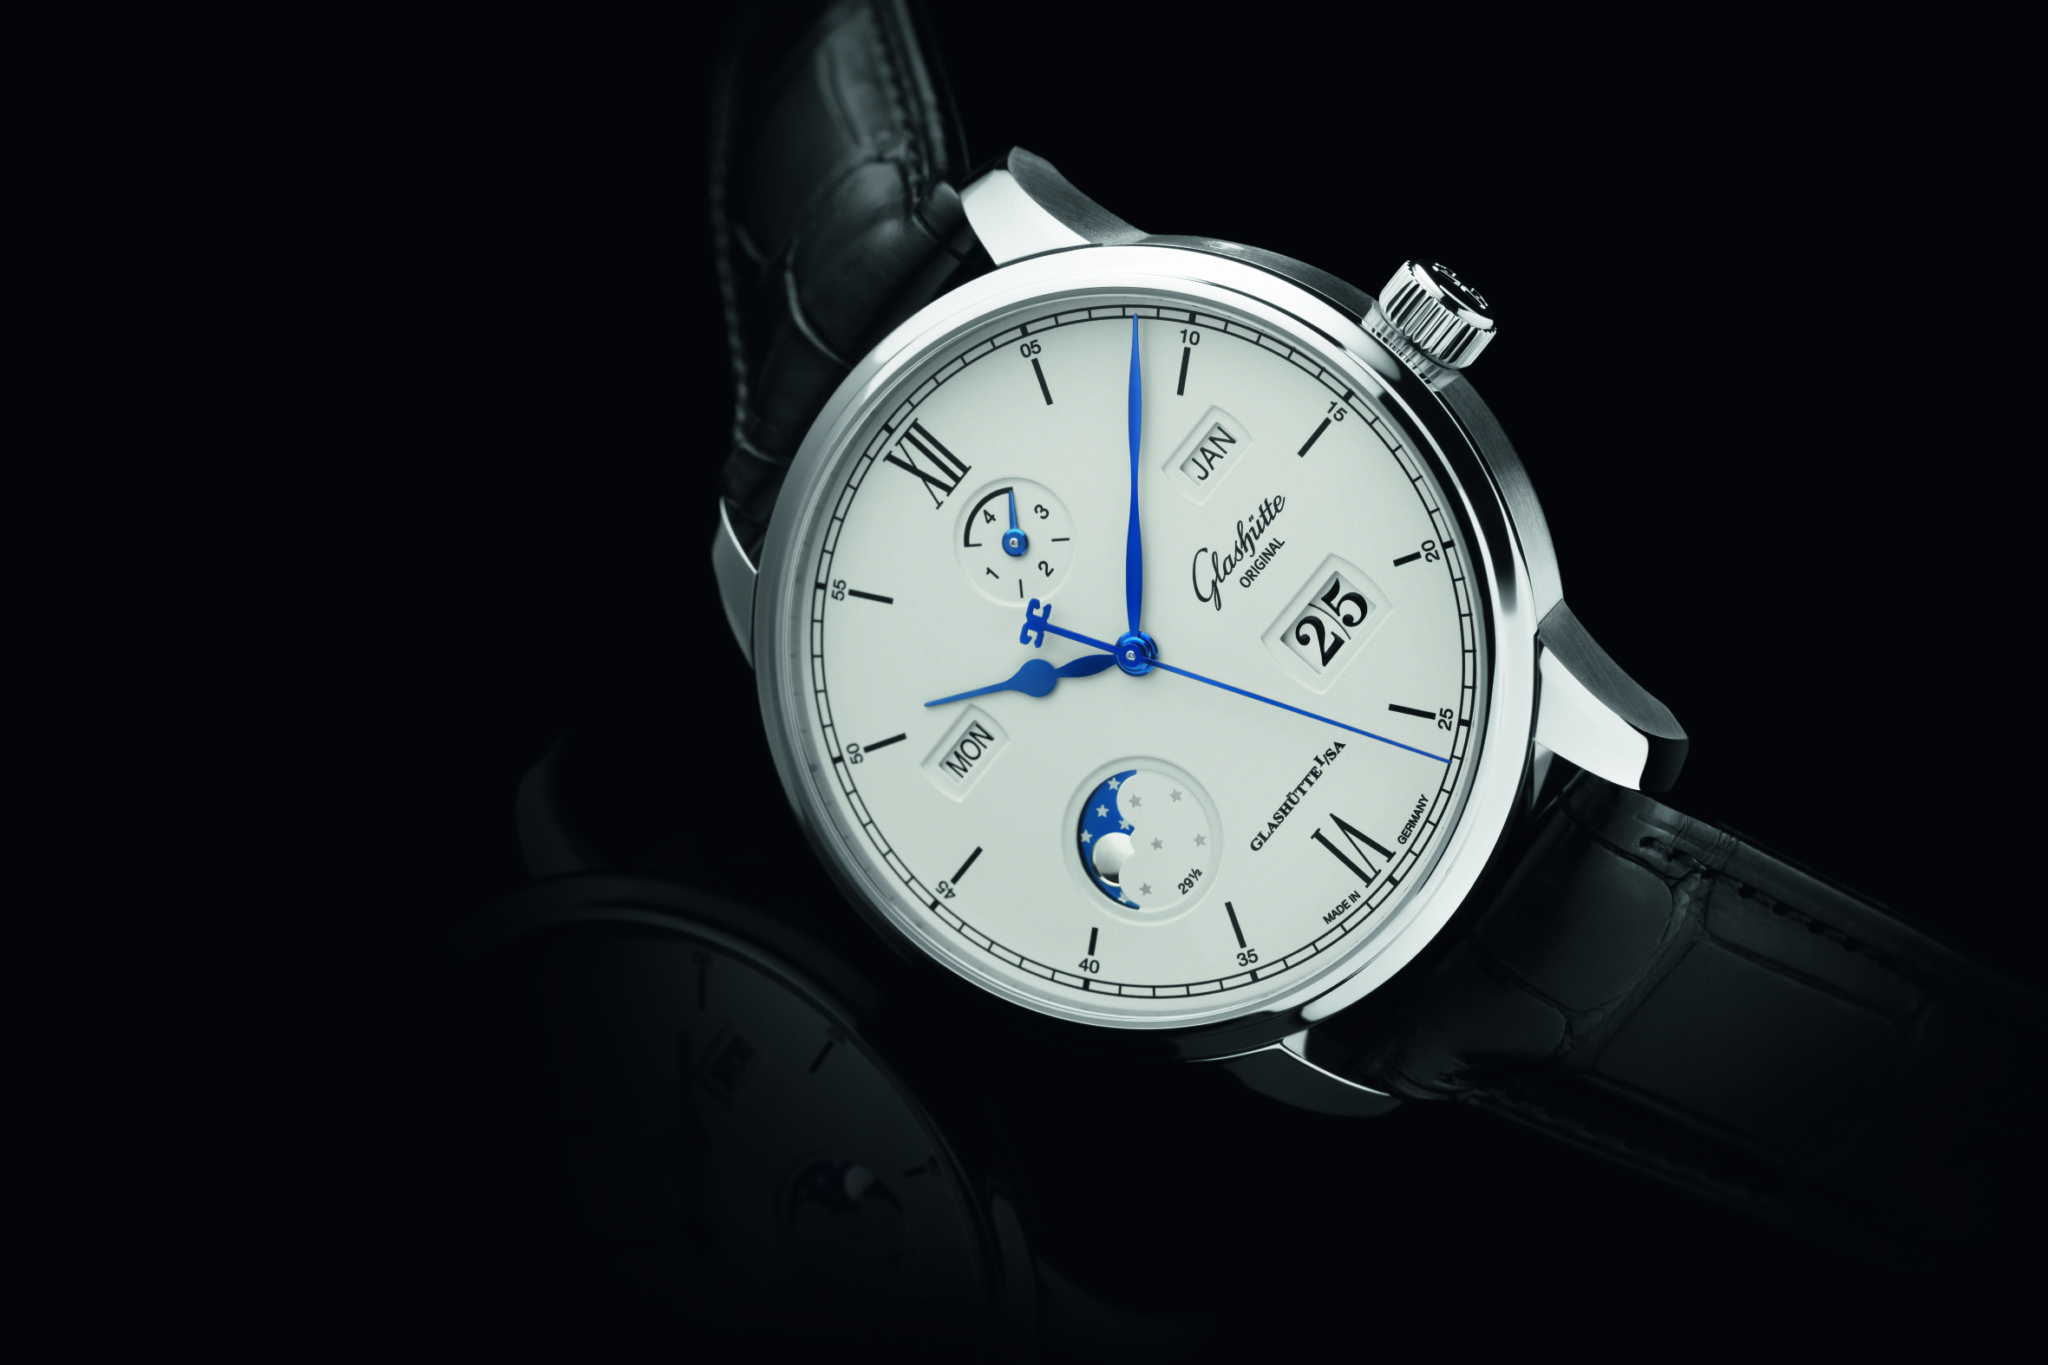 Glashutte original's senator excellence perpetual calendar demonstrates classical german watchmaking design and engineering.